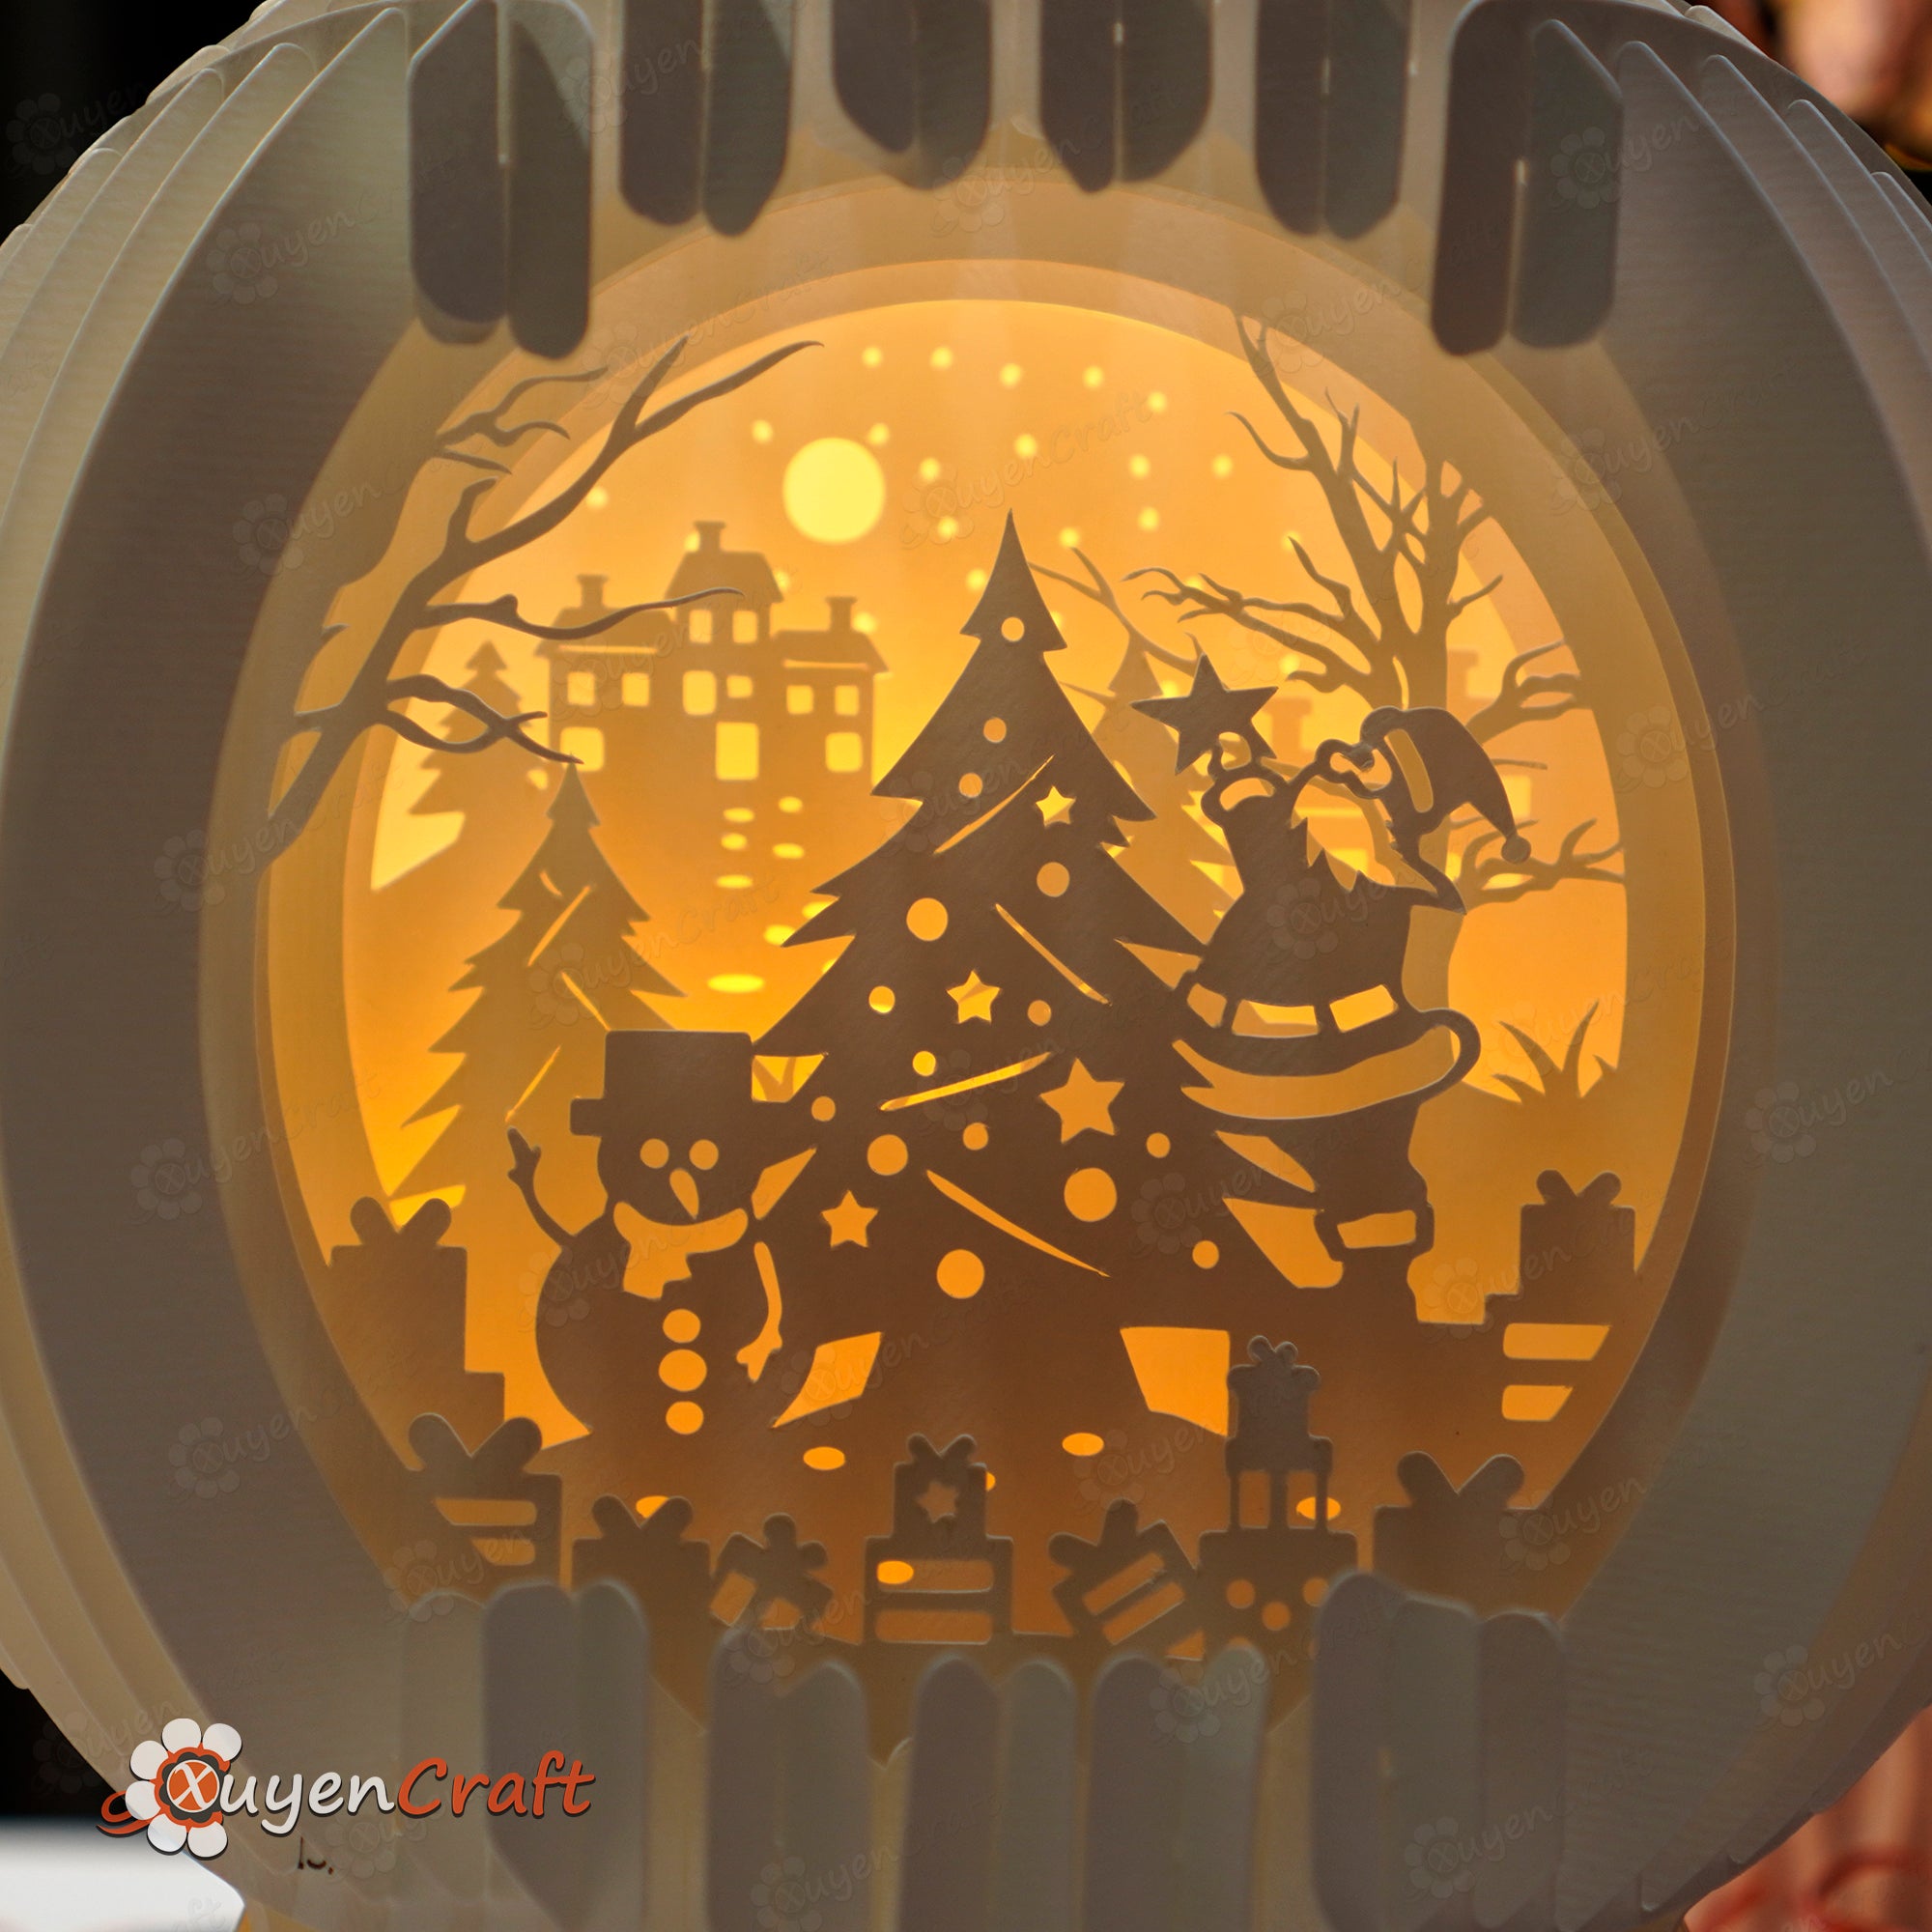 Snow Globe Pop Up Santa Claus and Snowman for Christmas Decor SVG, Studio3 Templates